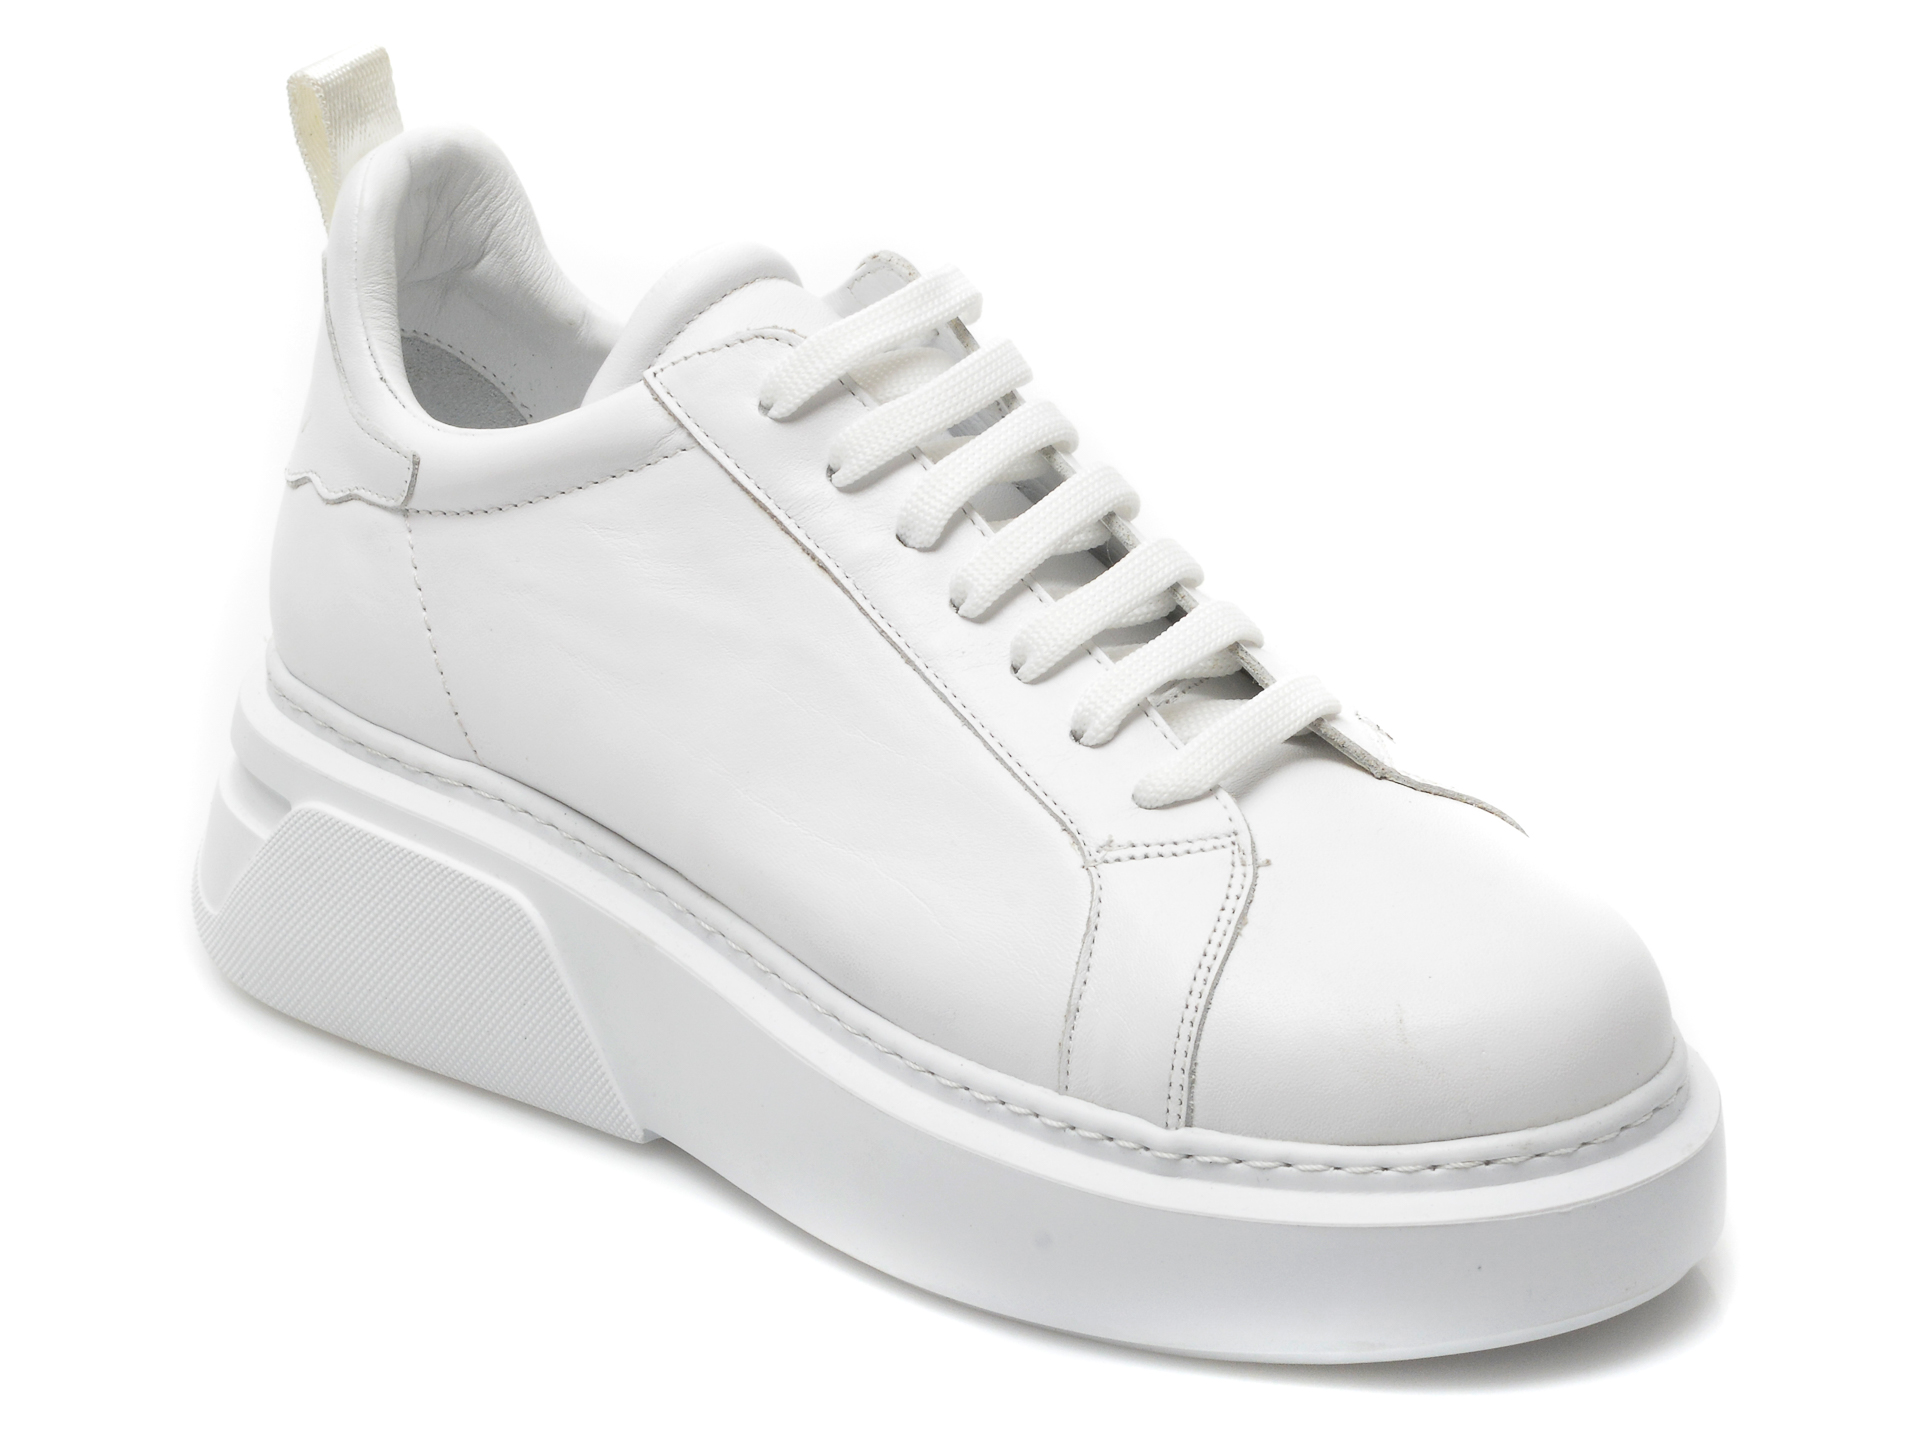 Pantofi sport MAGNOLYA albi, 2291, din piele naturala imagine reduceri black friday 2021 MAGNOLYA